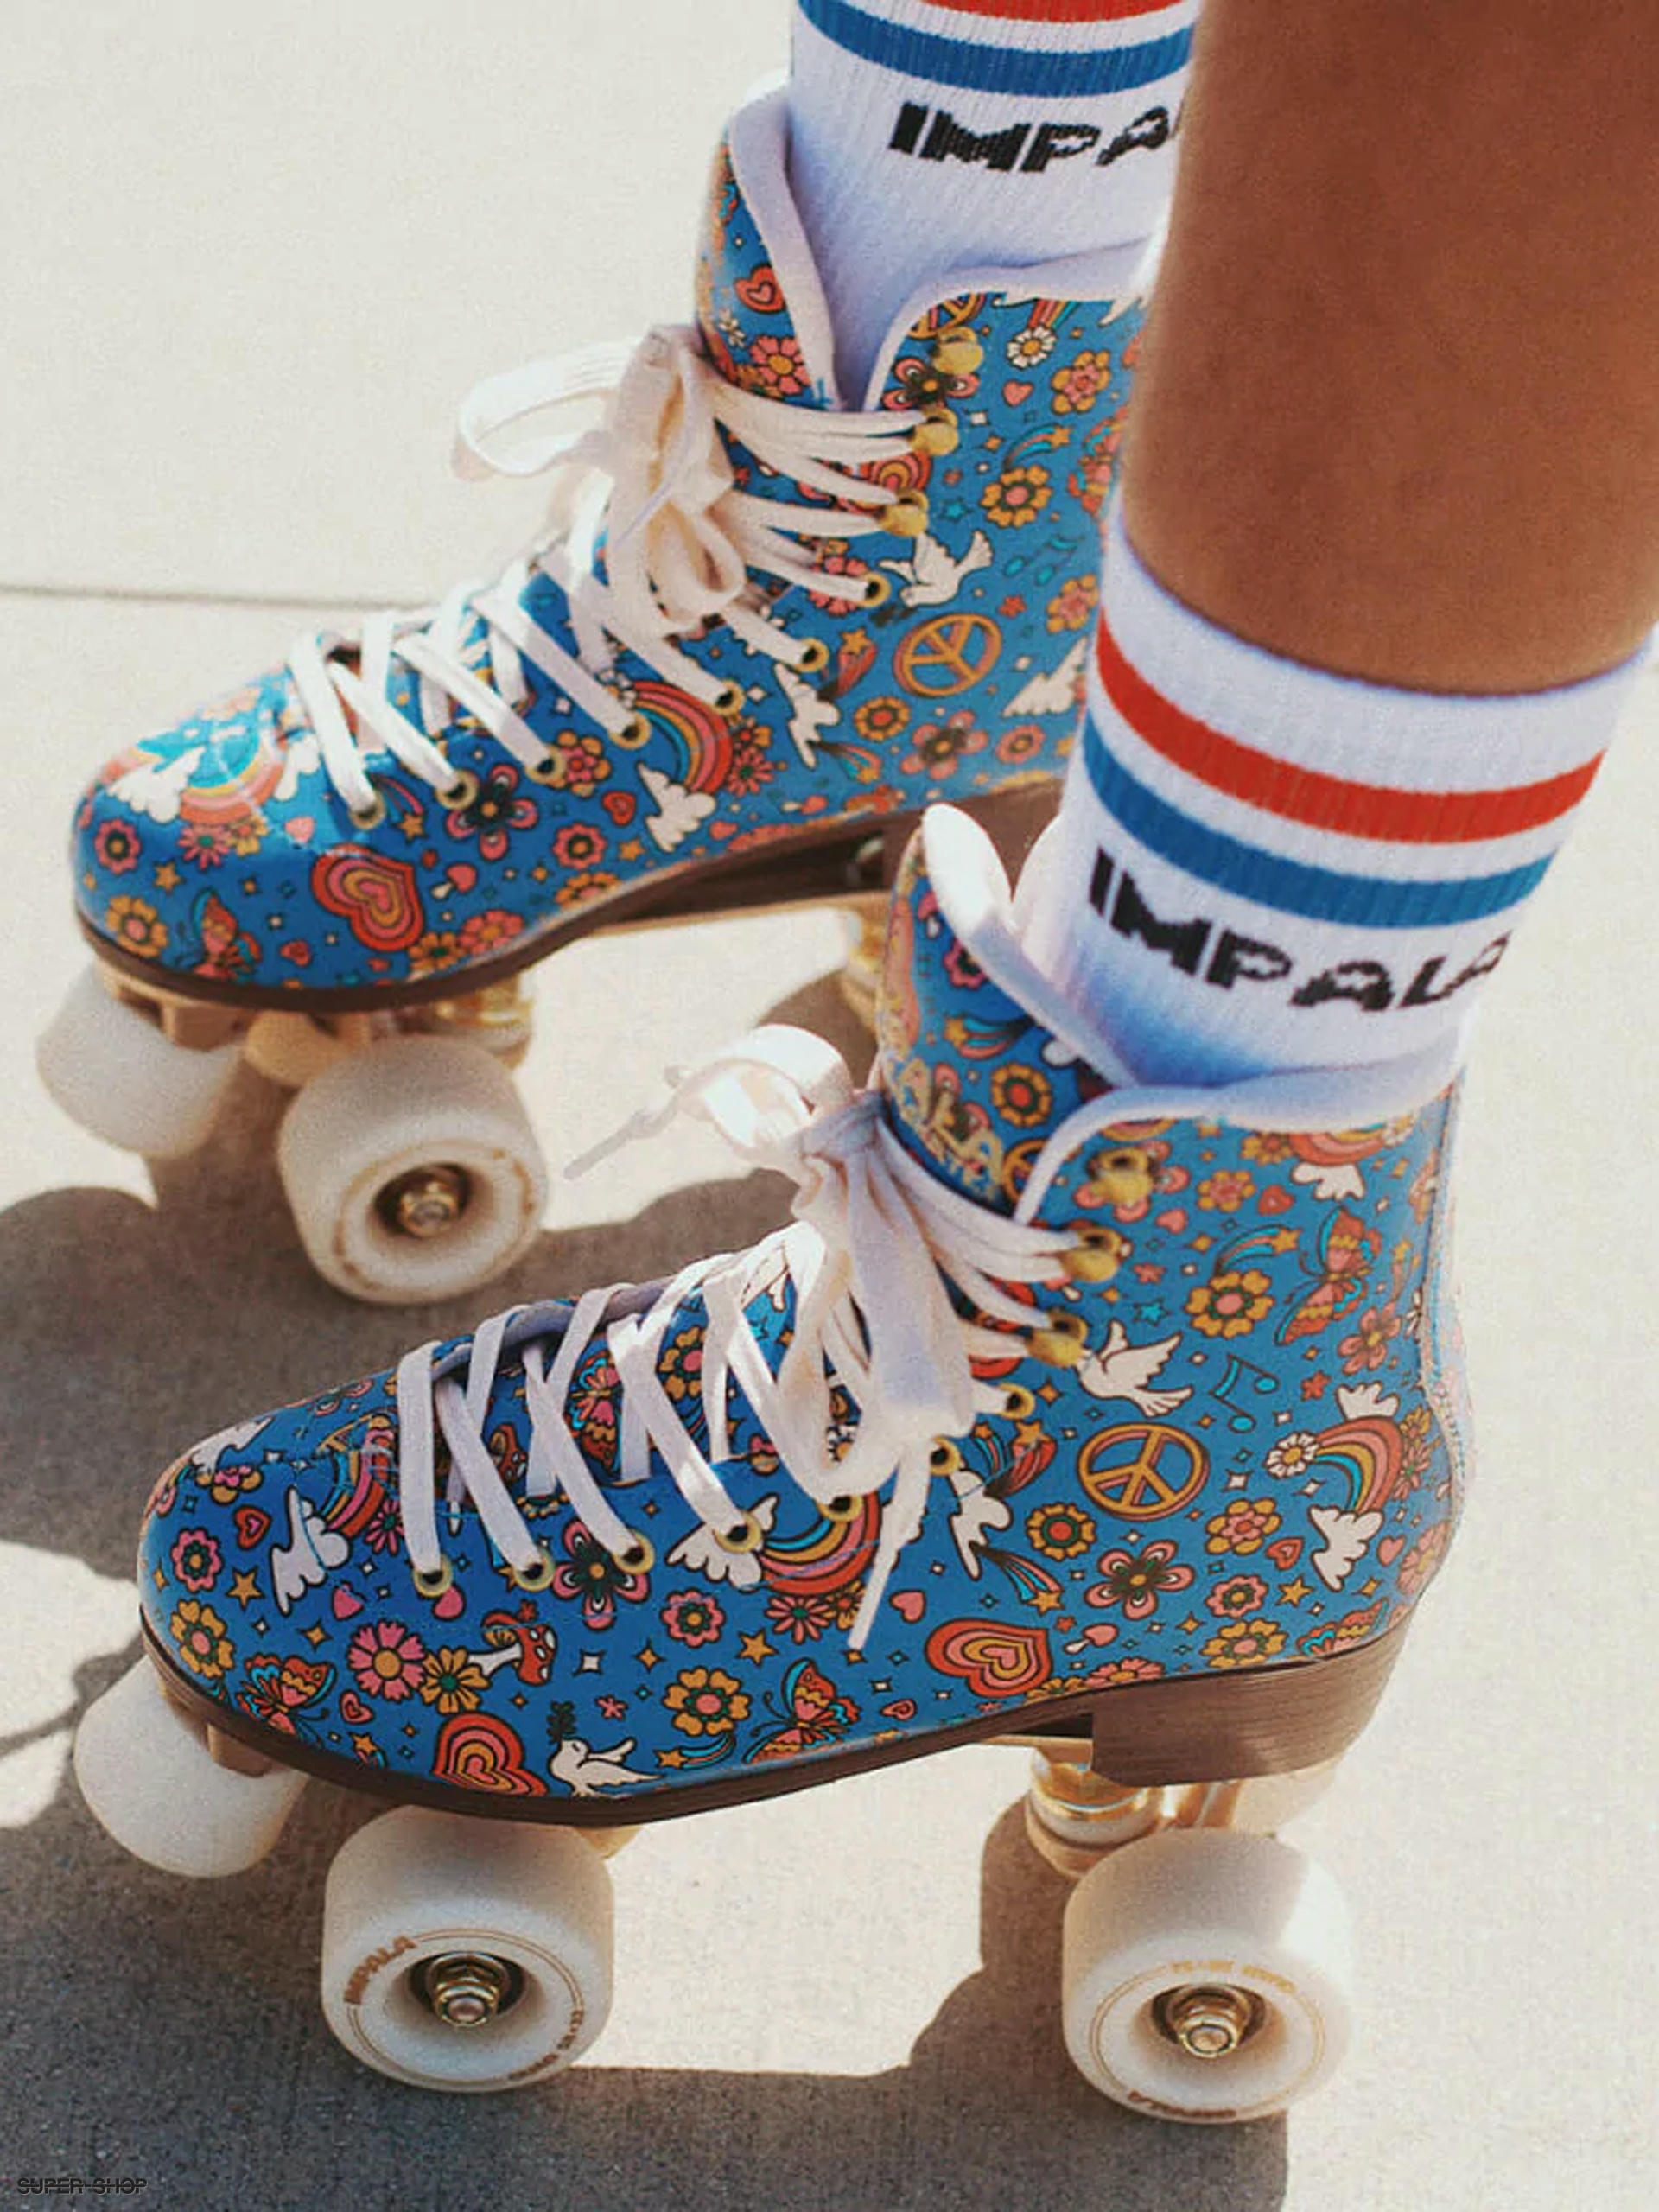 Impala Quad Skate Roller skates Wmn (harmony blue)